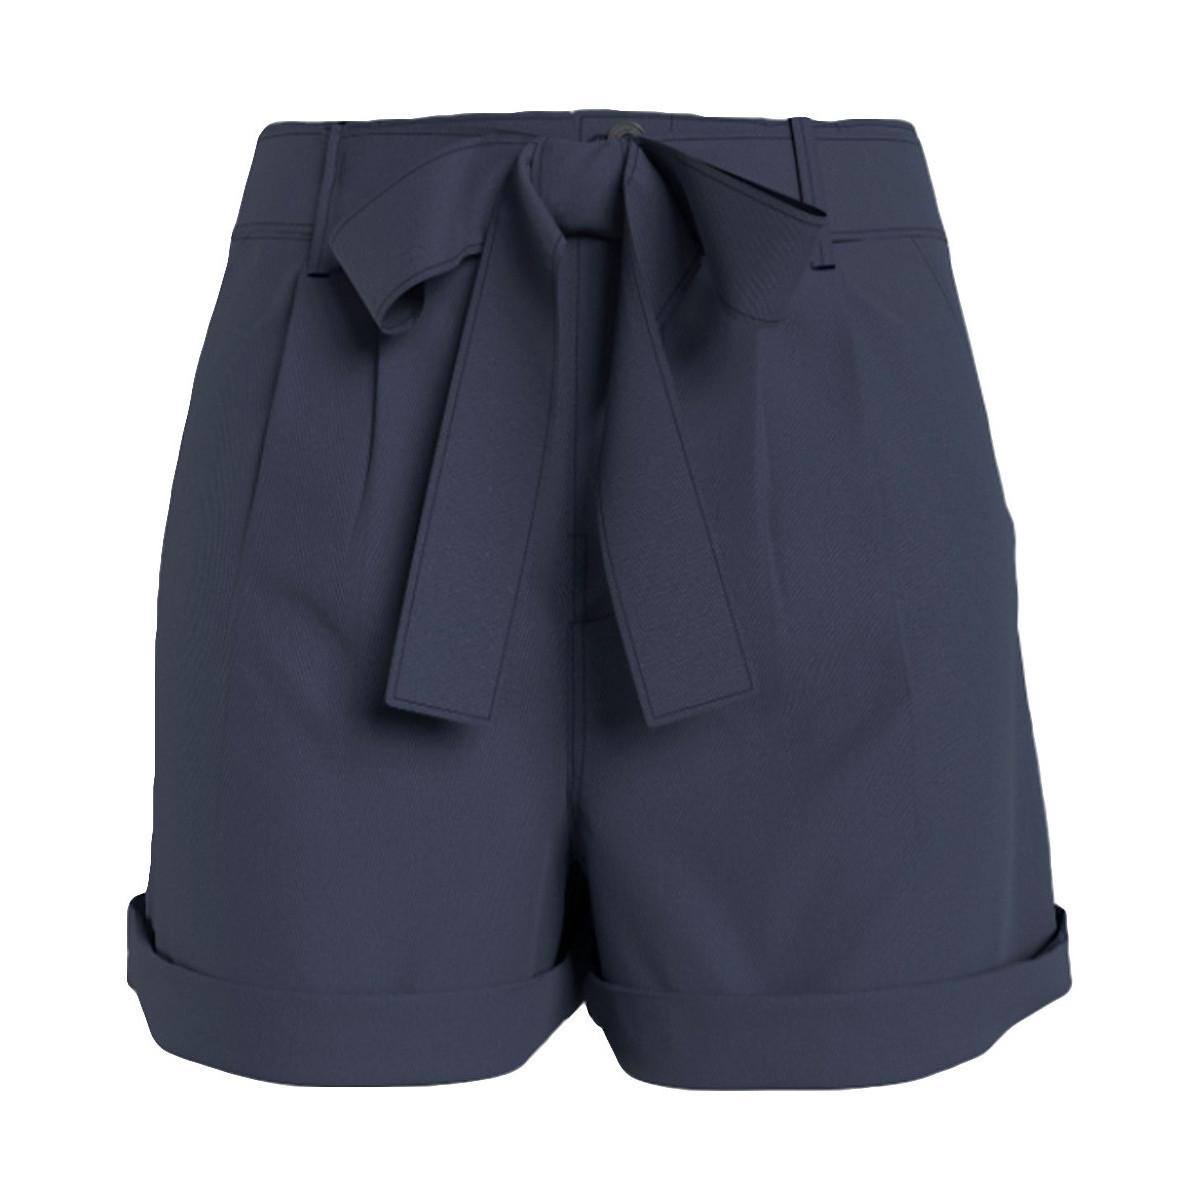 Vêtements Femme Shorts / Bermudas Tommy Jeans Mom belted Bleu